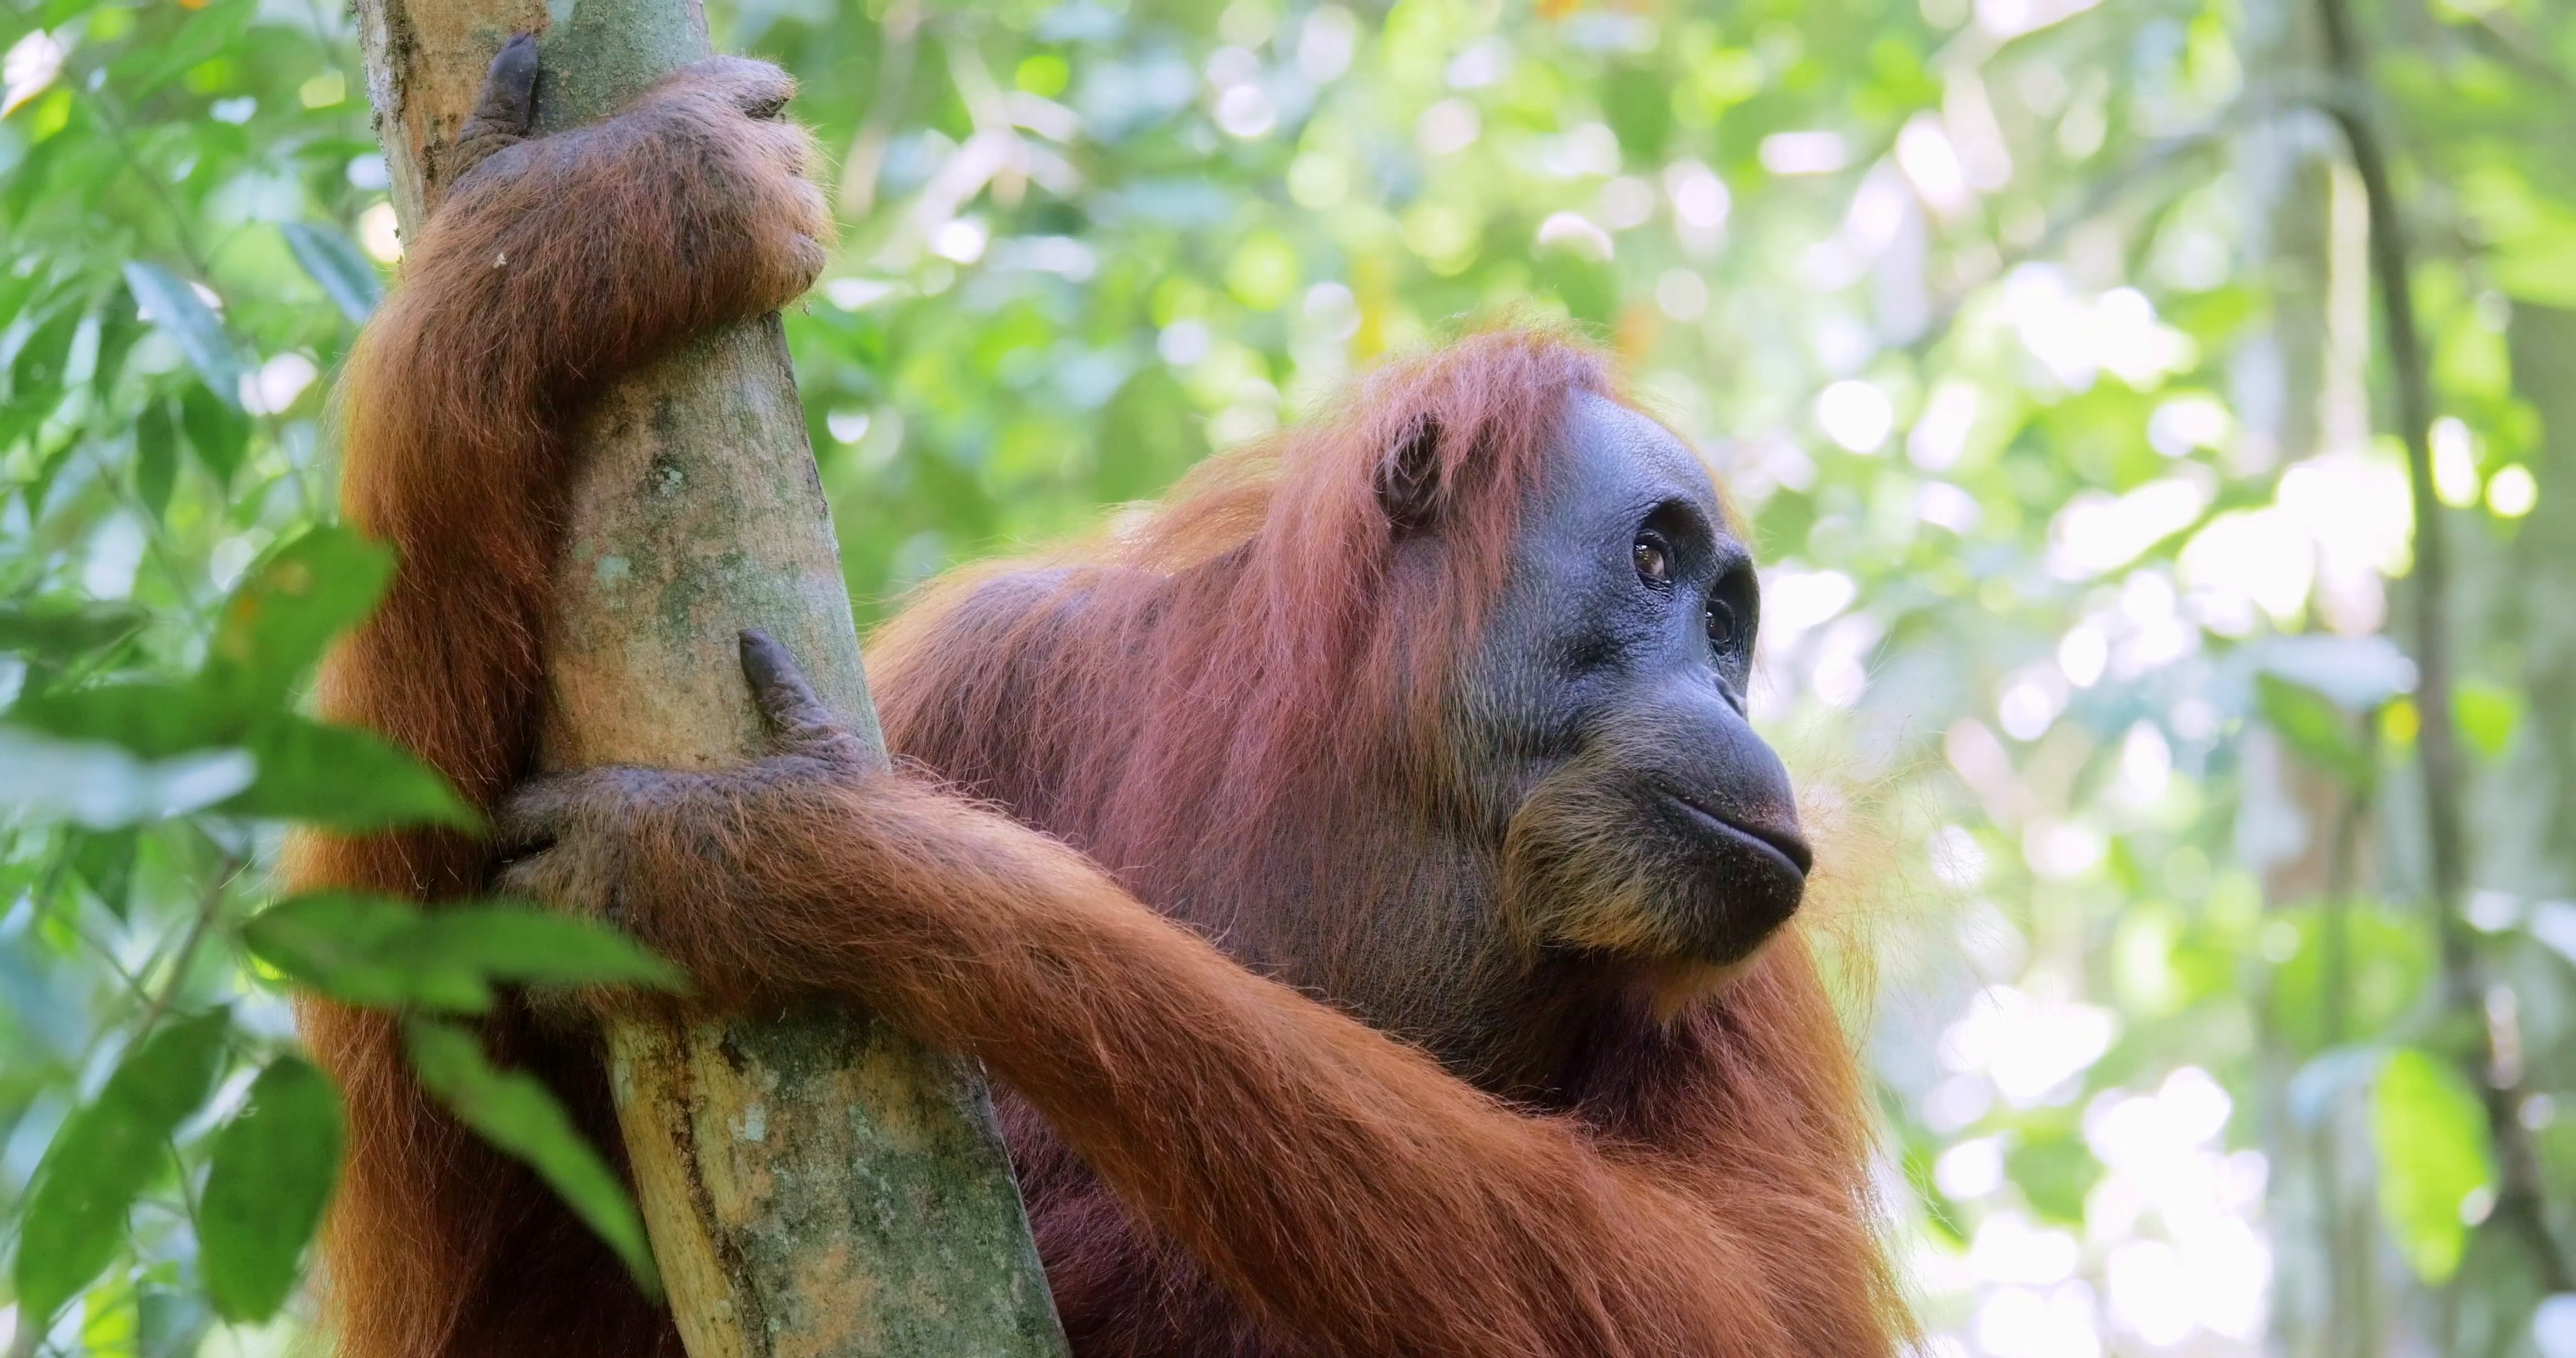 Wild orangutan monkey aware of animal sounds in wilderness of jungle ...